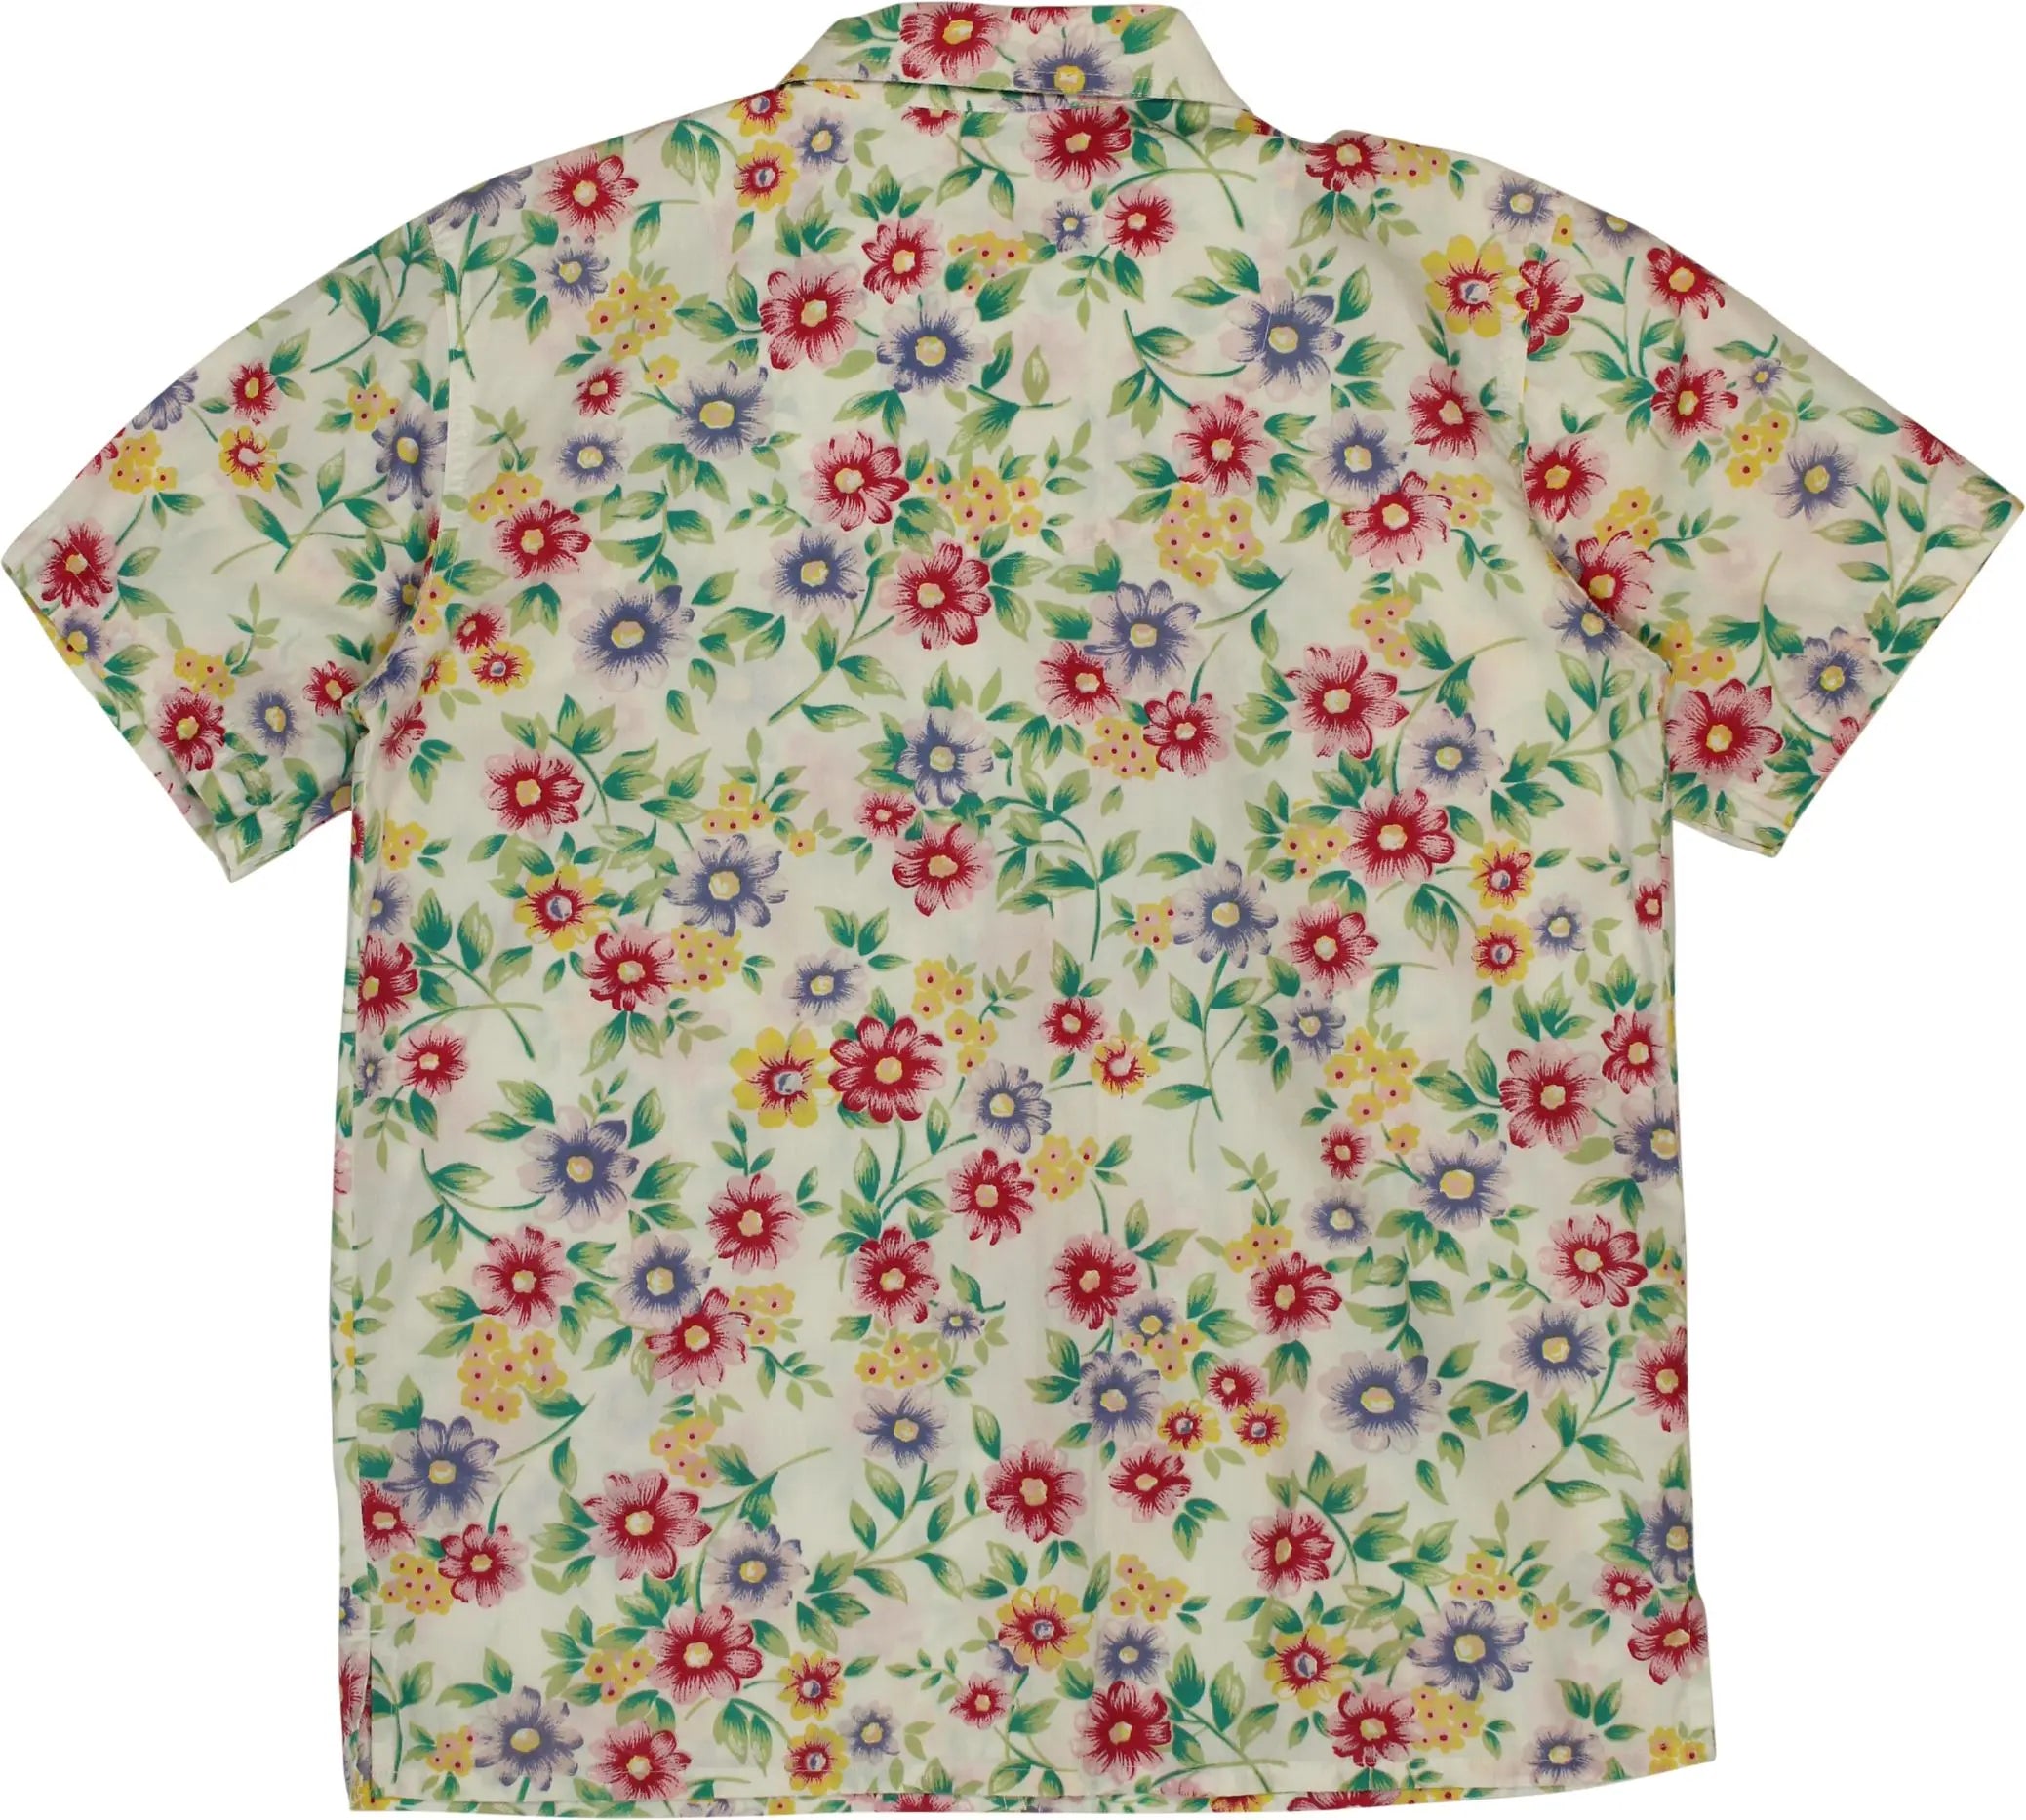 Bobbie Brooks - 90s Floral Blouse- ThriftTale.com - Vintage and second handclothing